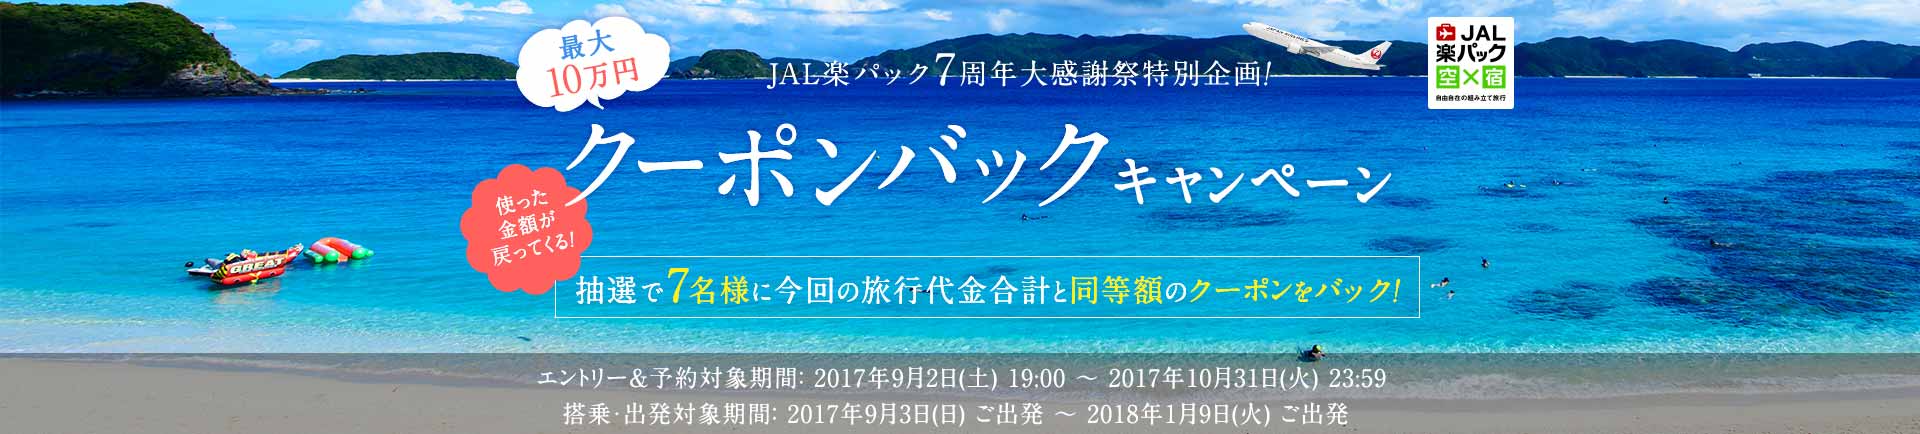 JAL楽パック7周年大感謝祭特別企画